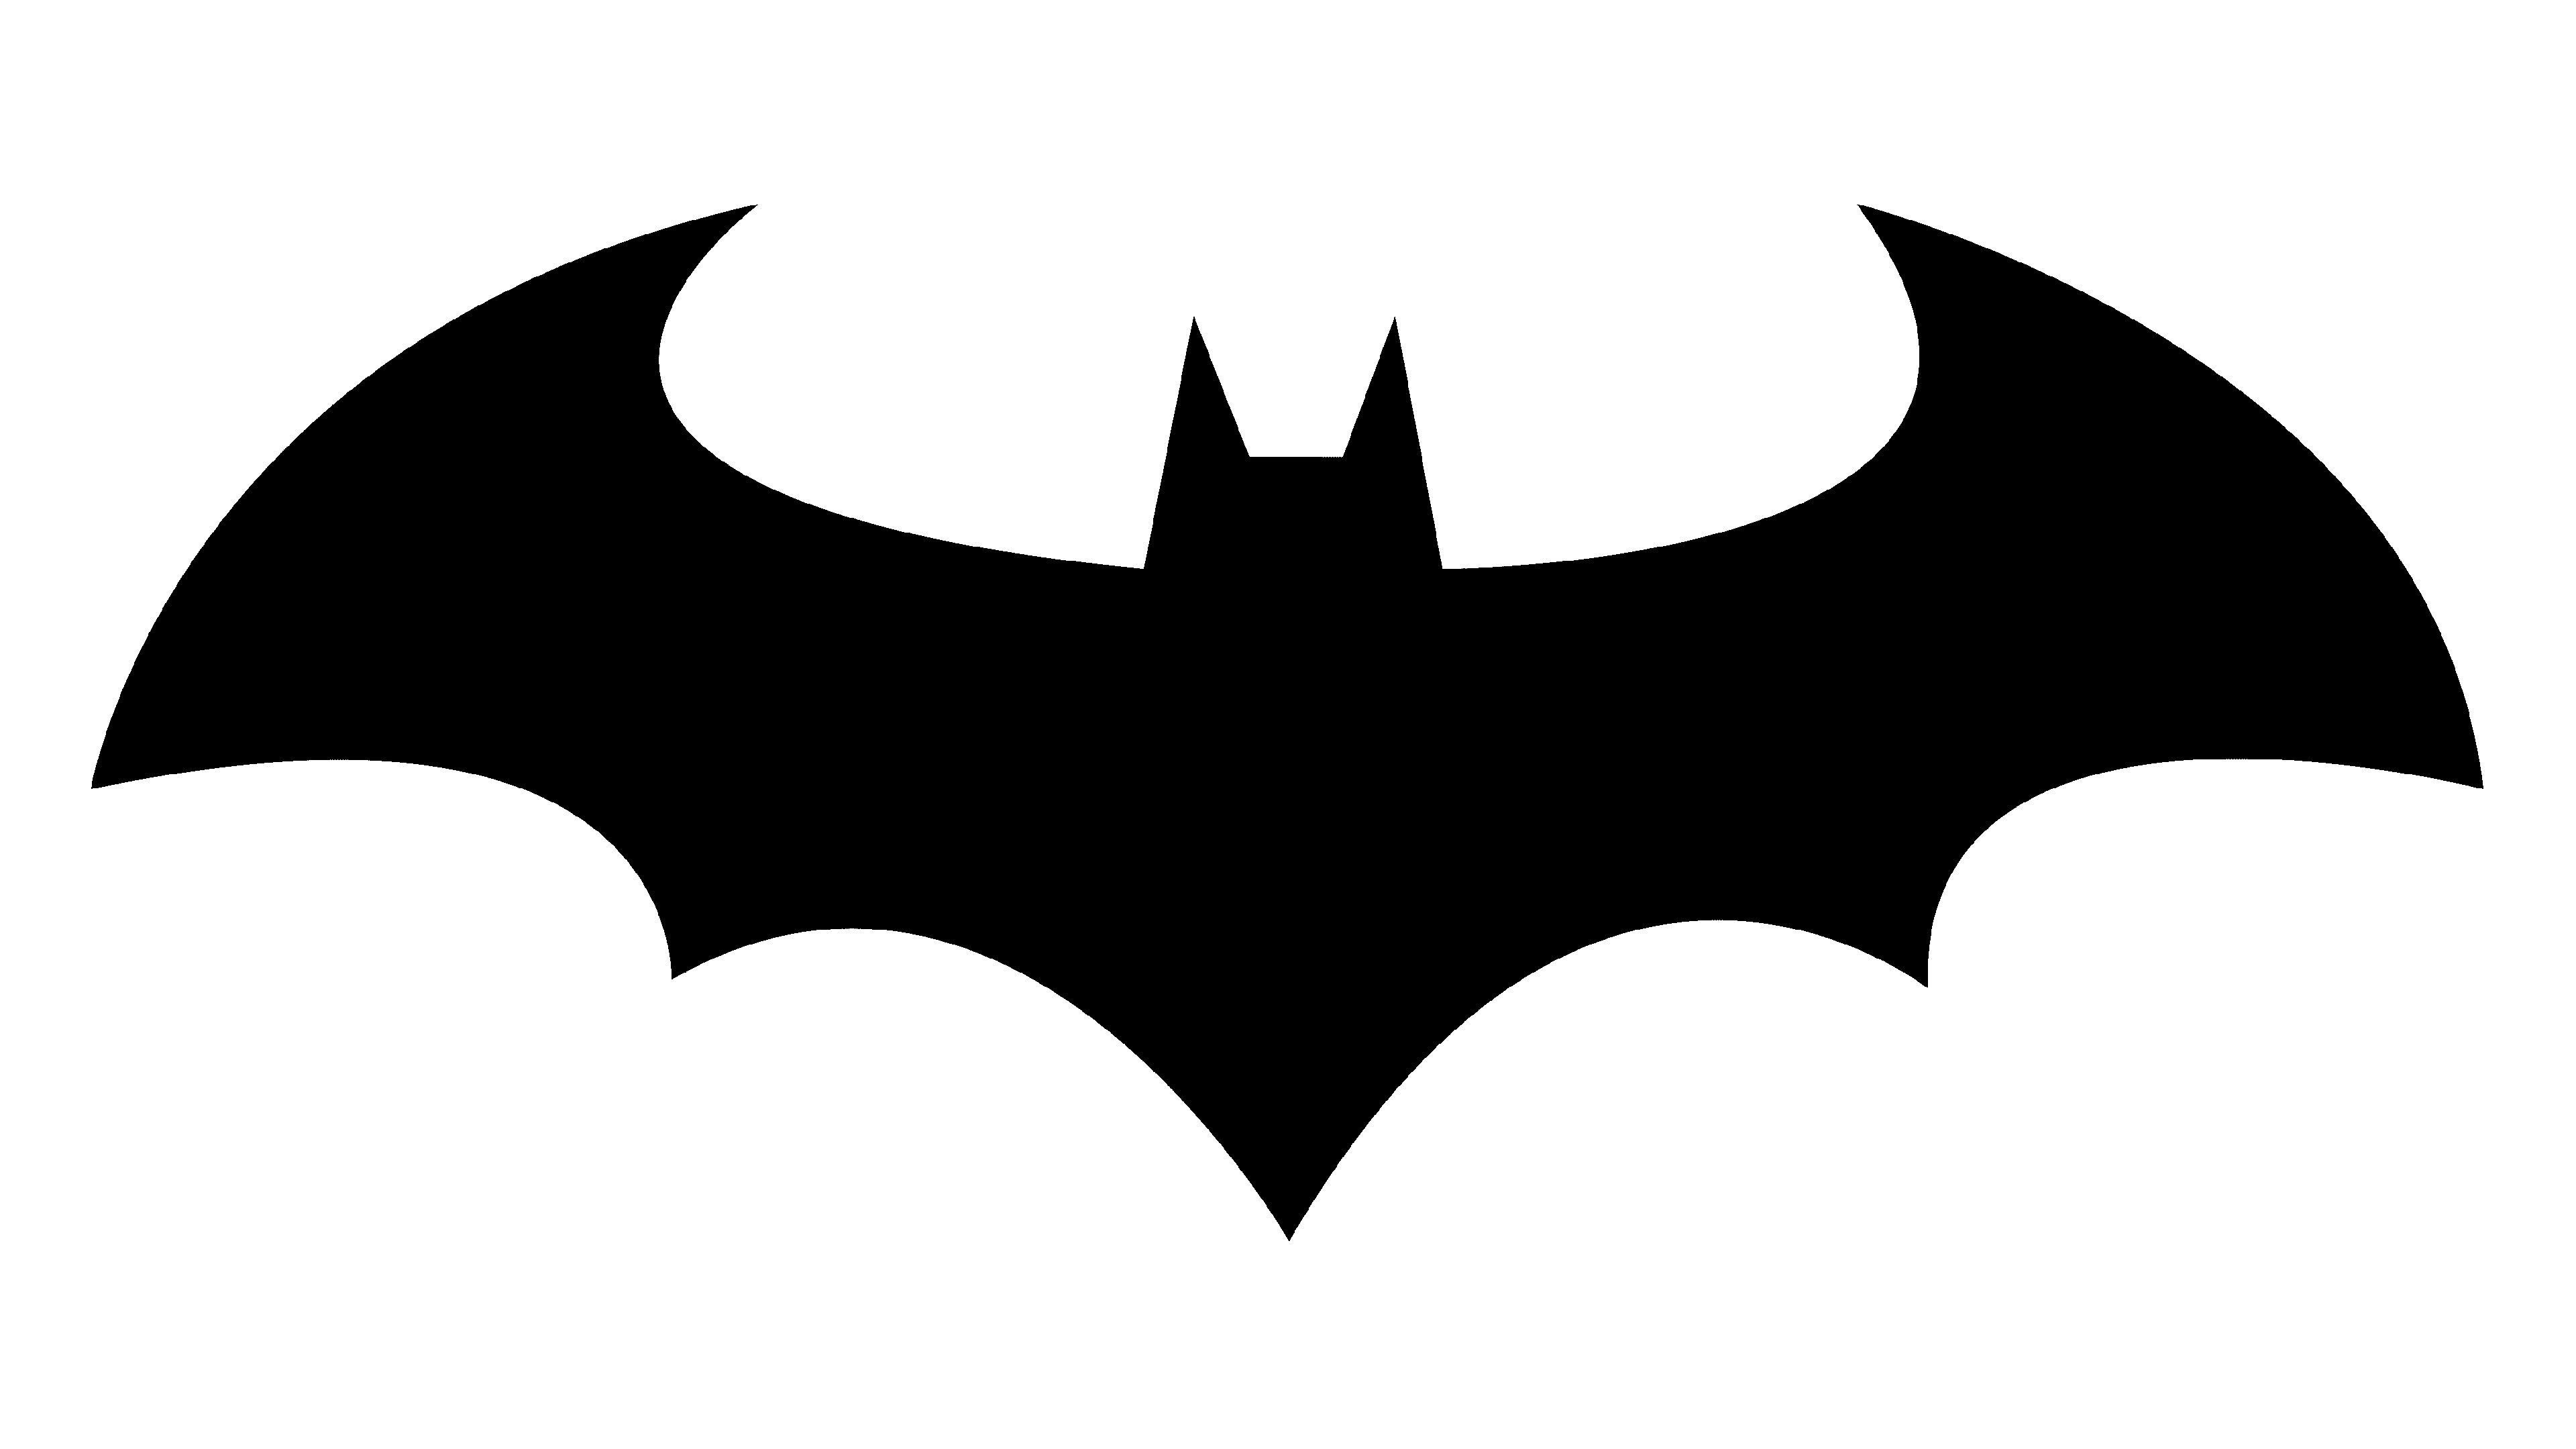 About Kane Brown's Batman Tattoo